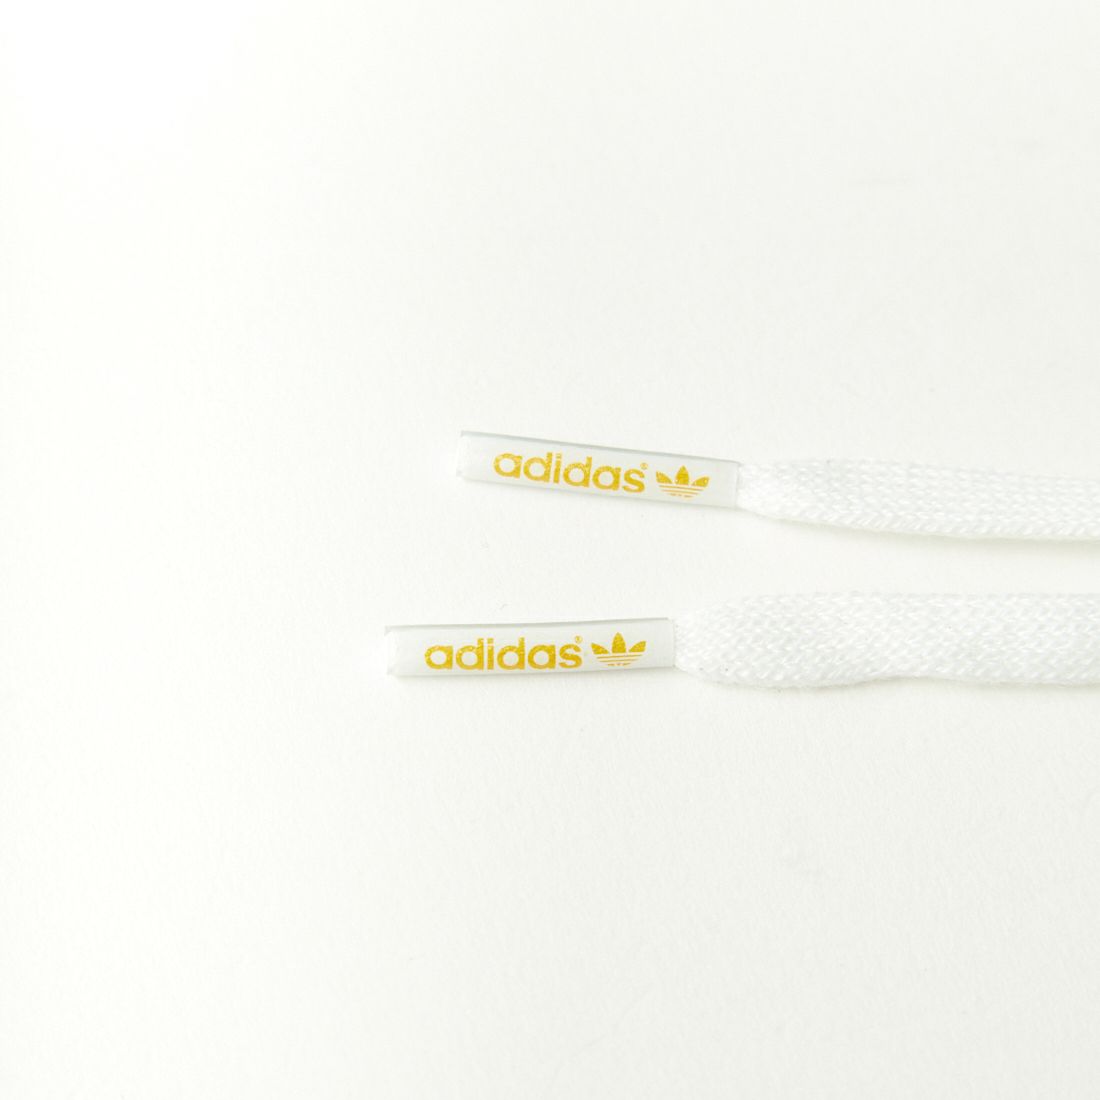 adidas Originals [アディダス オリジナルス] ガゼル インドア [GAZELLE-INDOOR] H06259